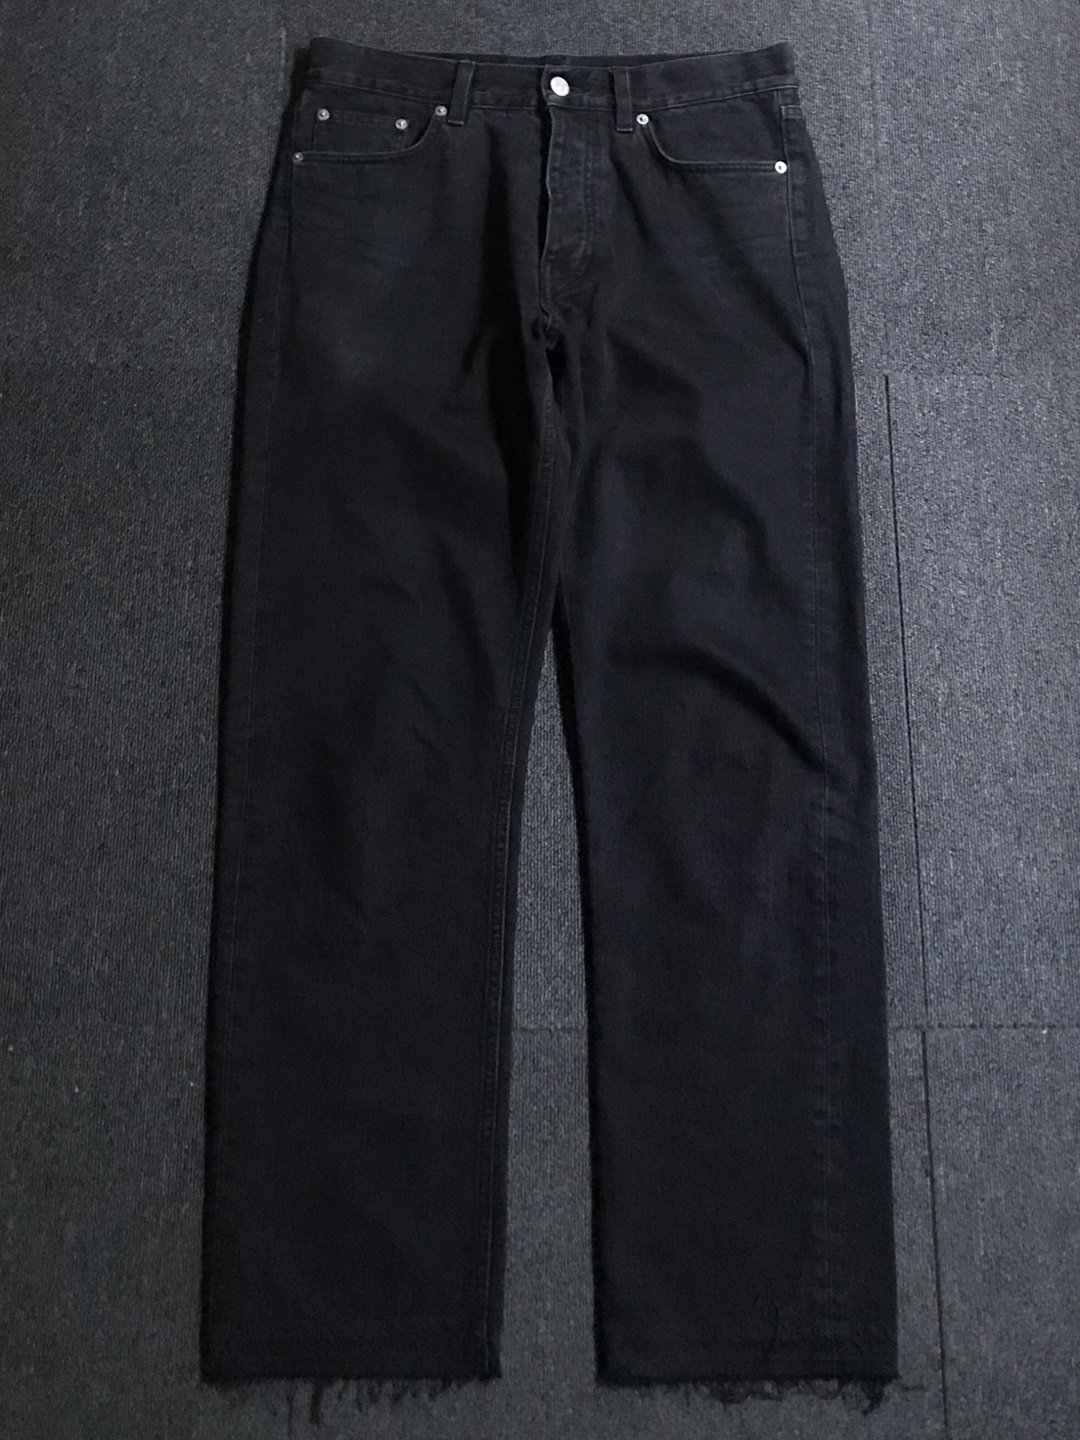 sunflower faded black cut off straight leg jeans (31/32 size, ~31인치 추천)